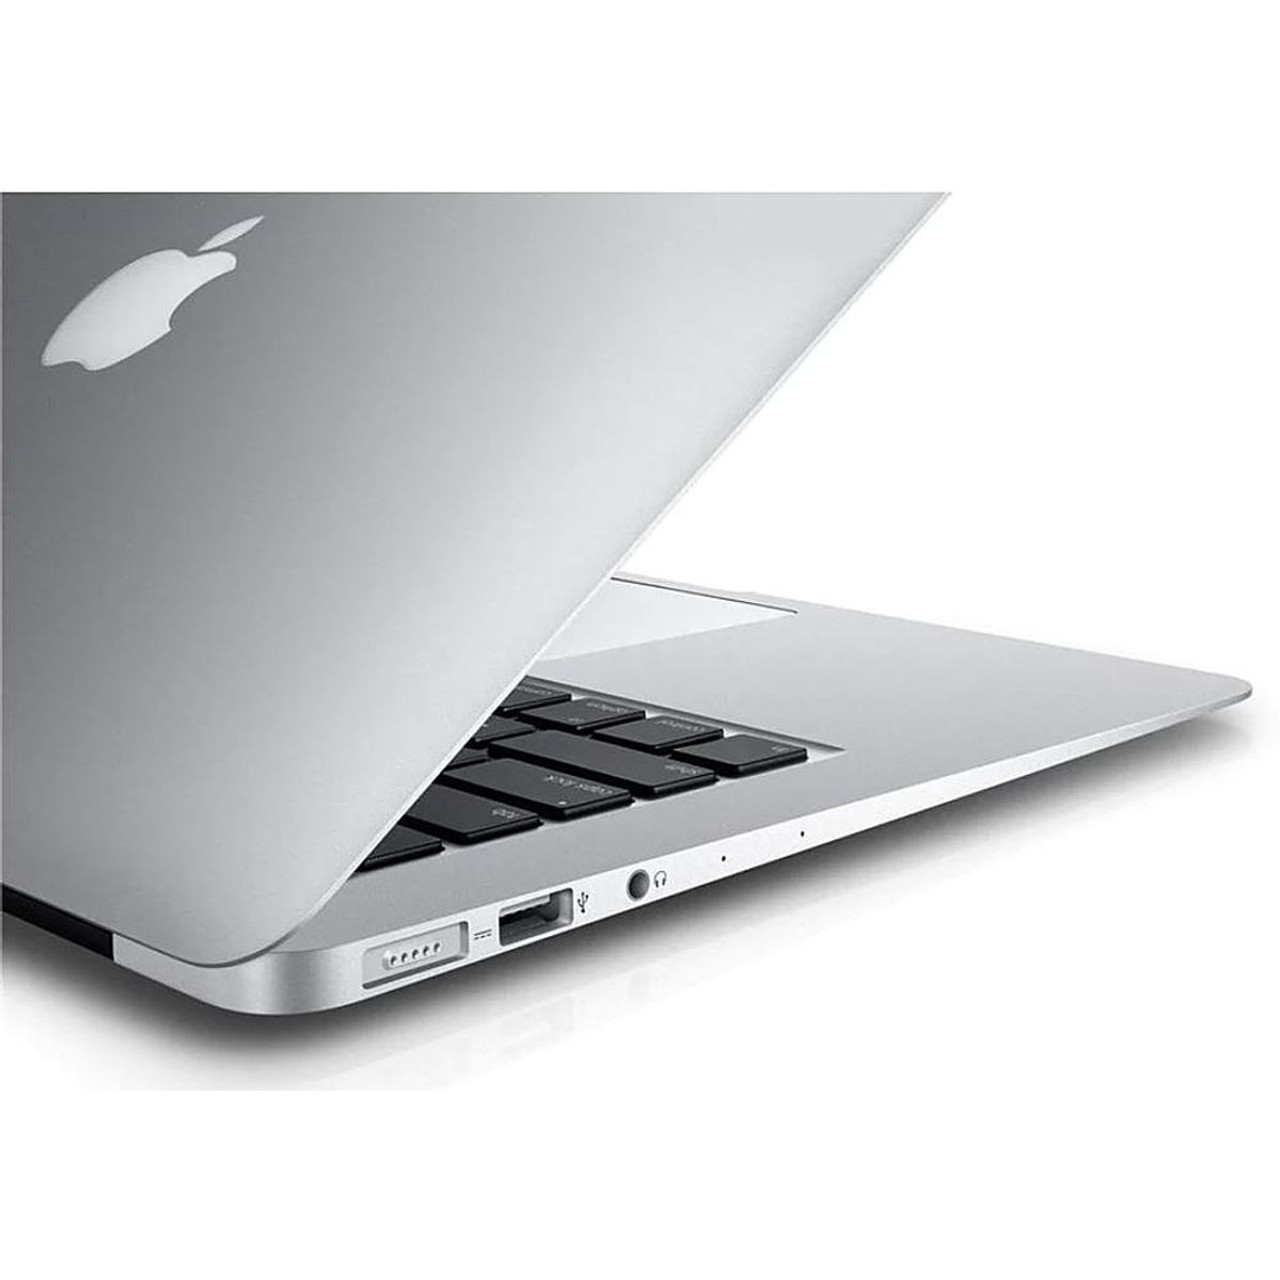 Apple® MacBook Air, 8GB RAM, 128GB SSD, MD231LL/A product image